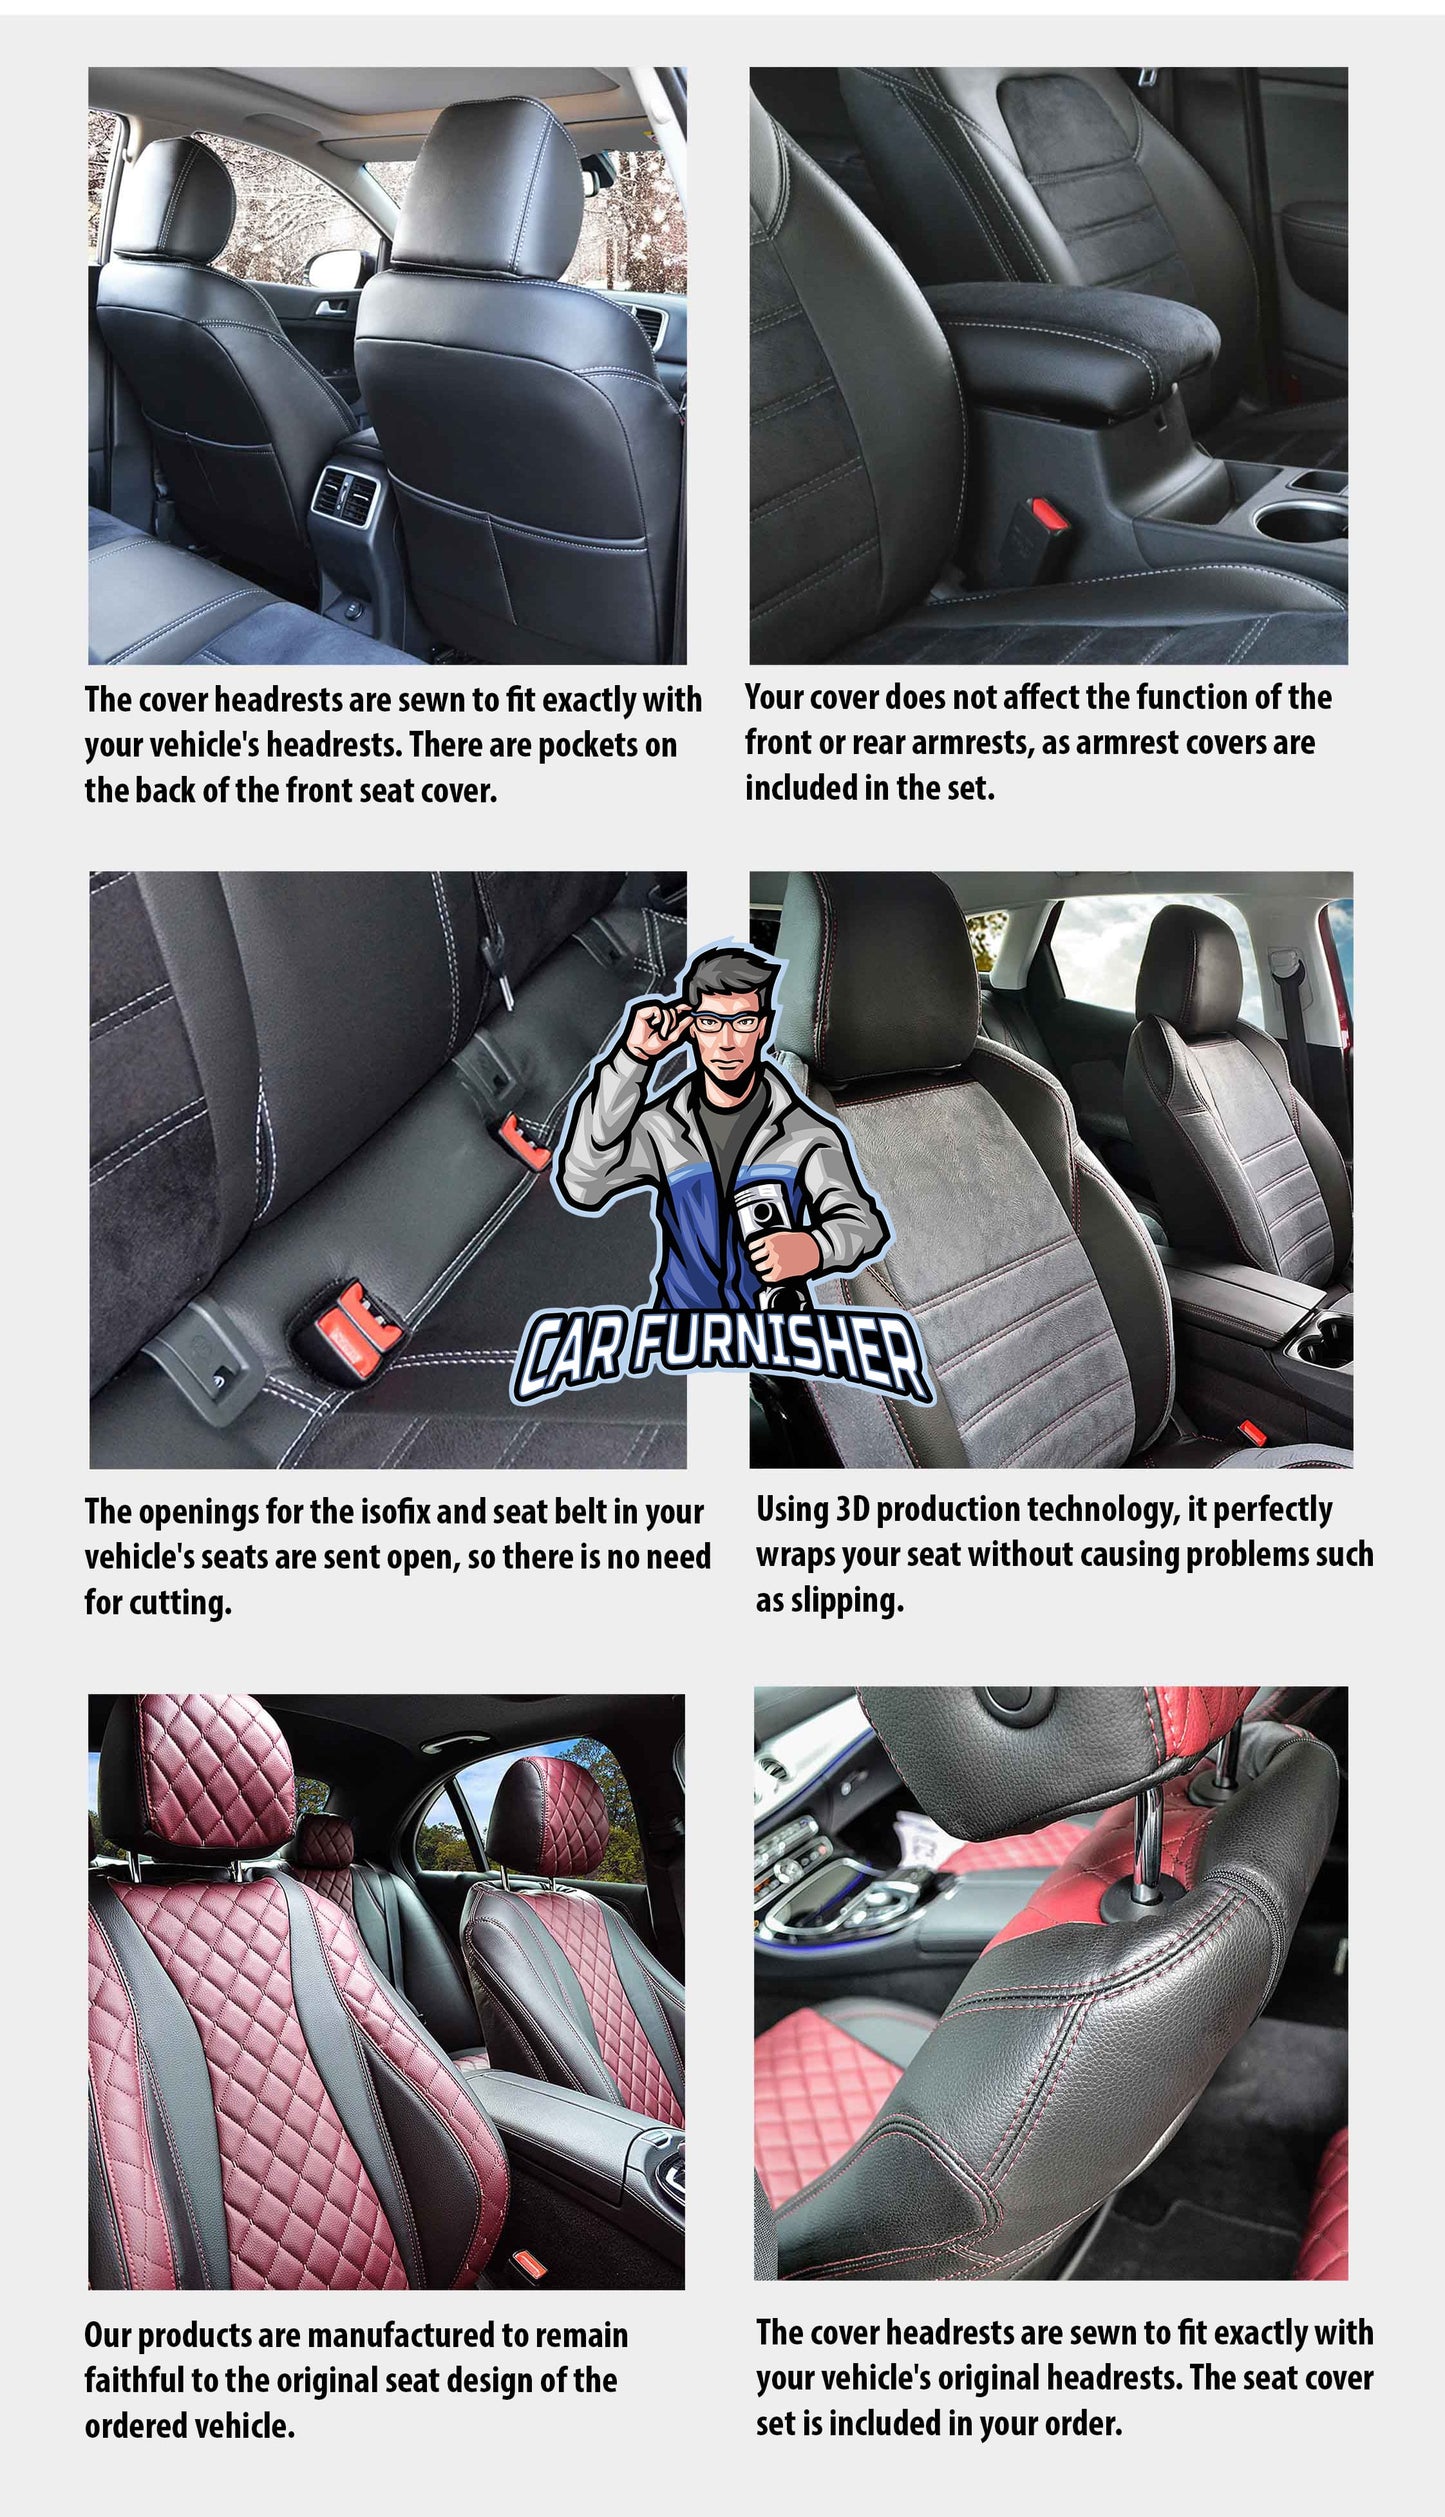 Peugeot Boxer Seat Covers Paris Leather & Jacquard Design Beige Leather & Jacquard Fabric